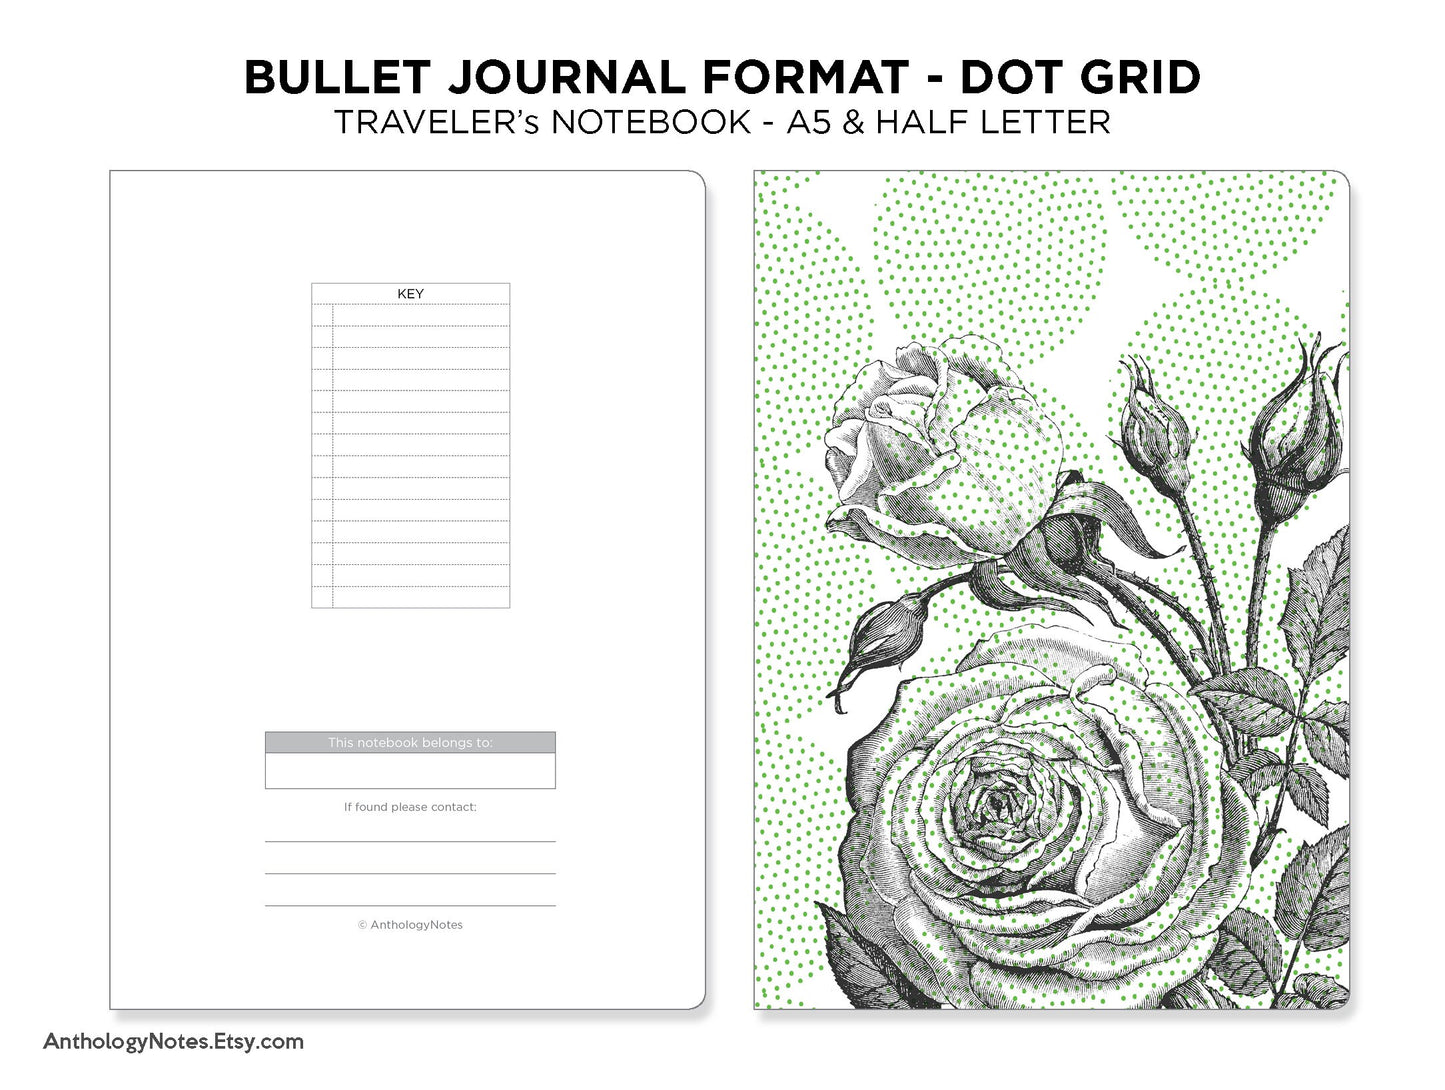 A5 & Half Letter Bullet Logging System Format DOT Grid Traveler's Notebook Printable Insert - Bu-Jo Format